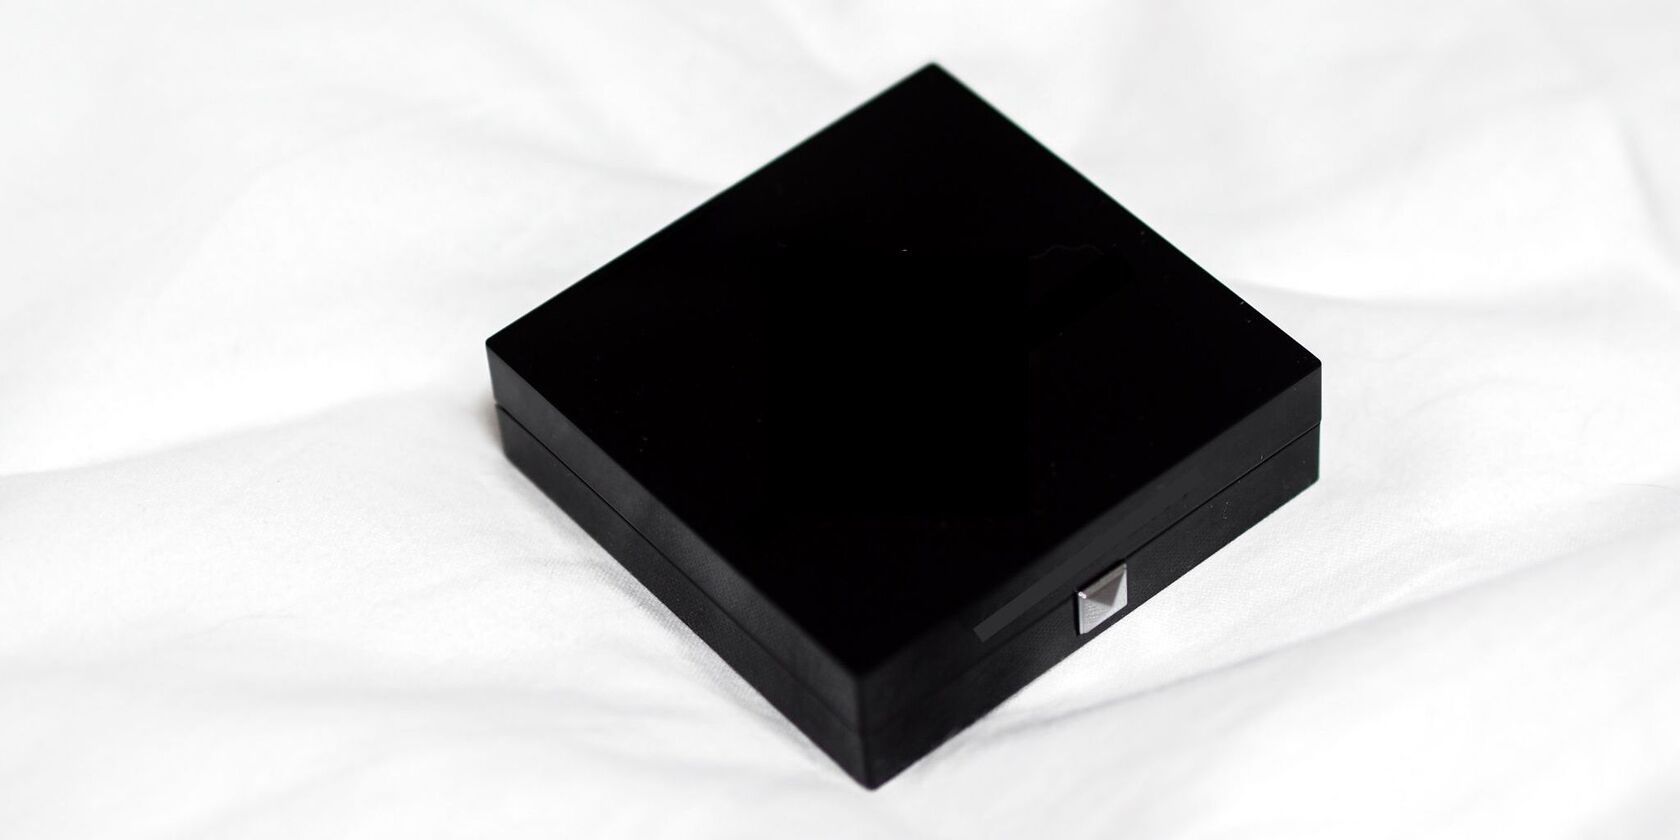 An image of a black box